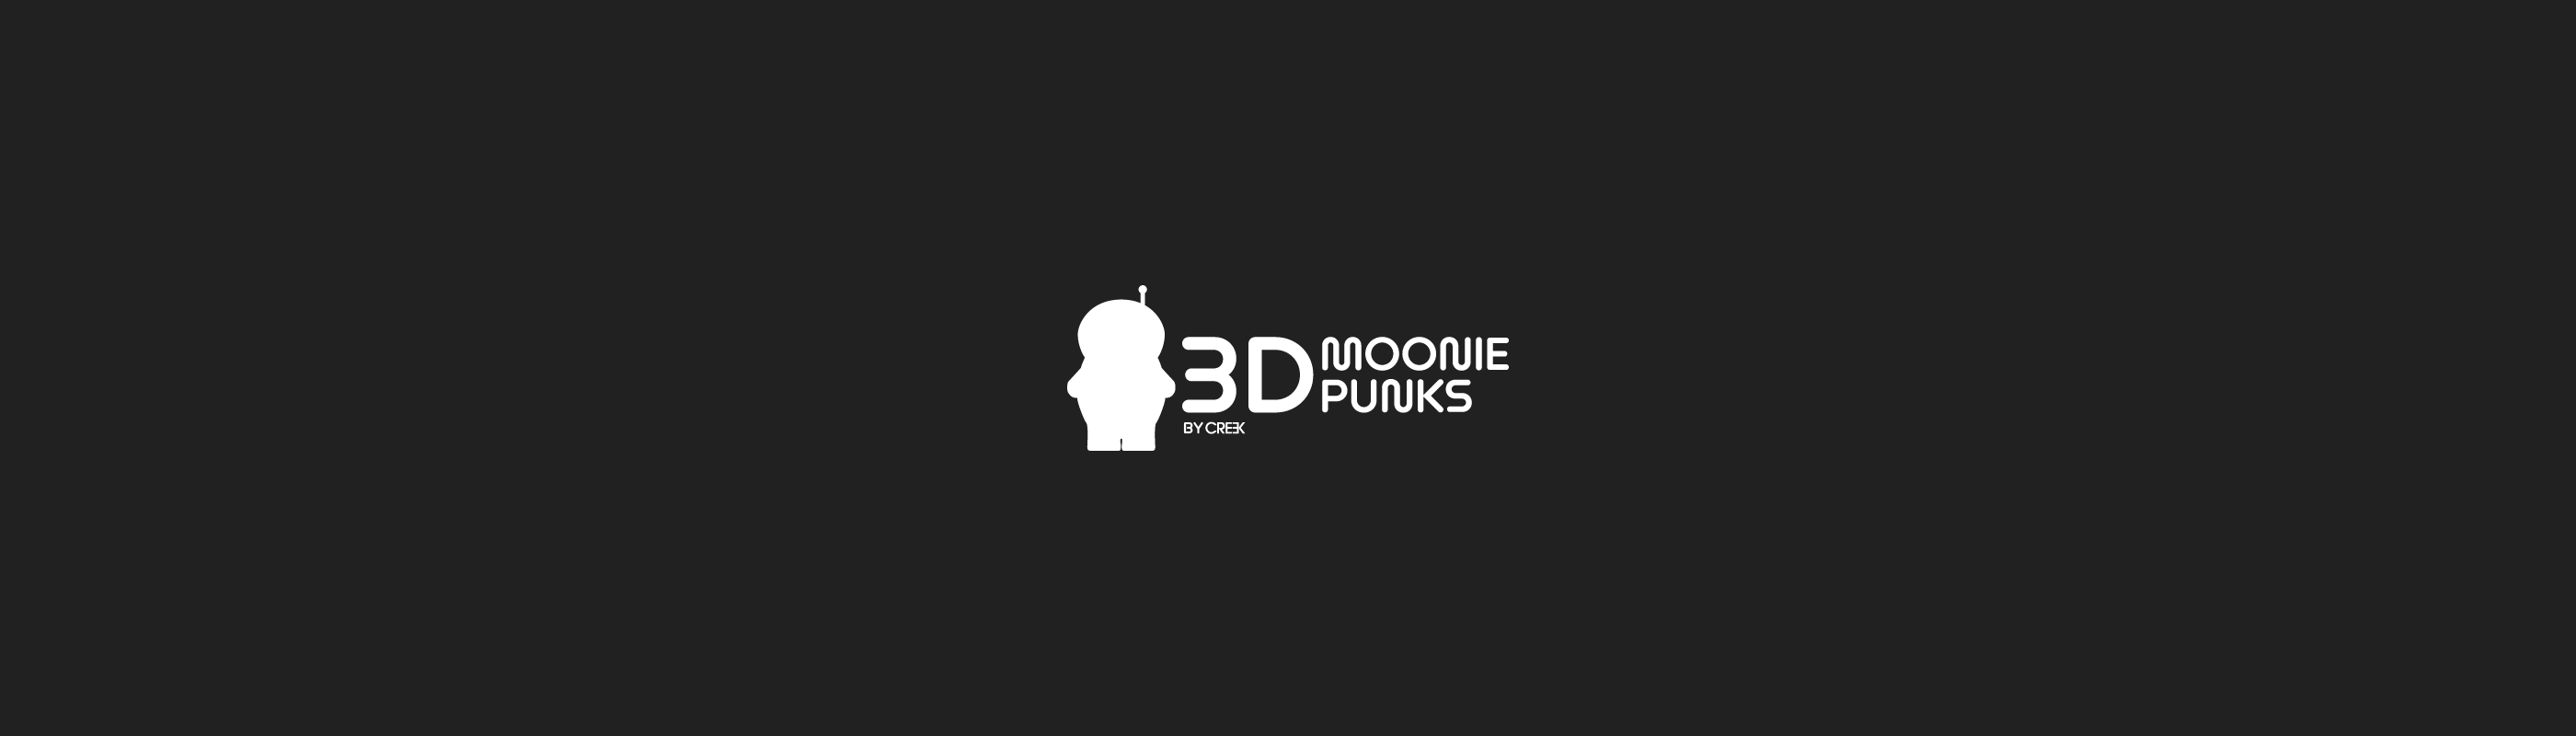 3D Moonie Punks